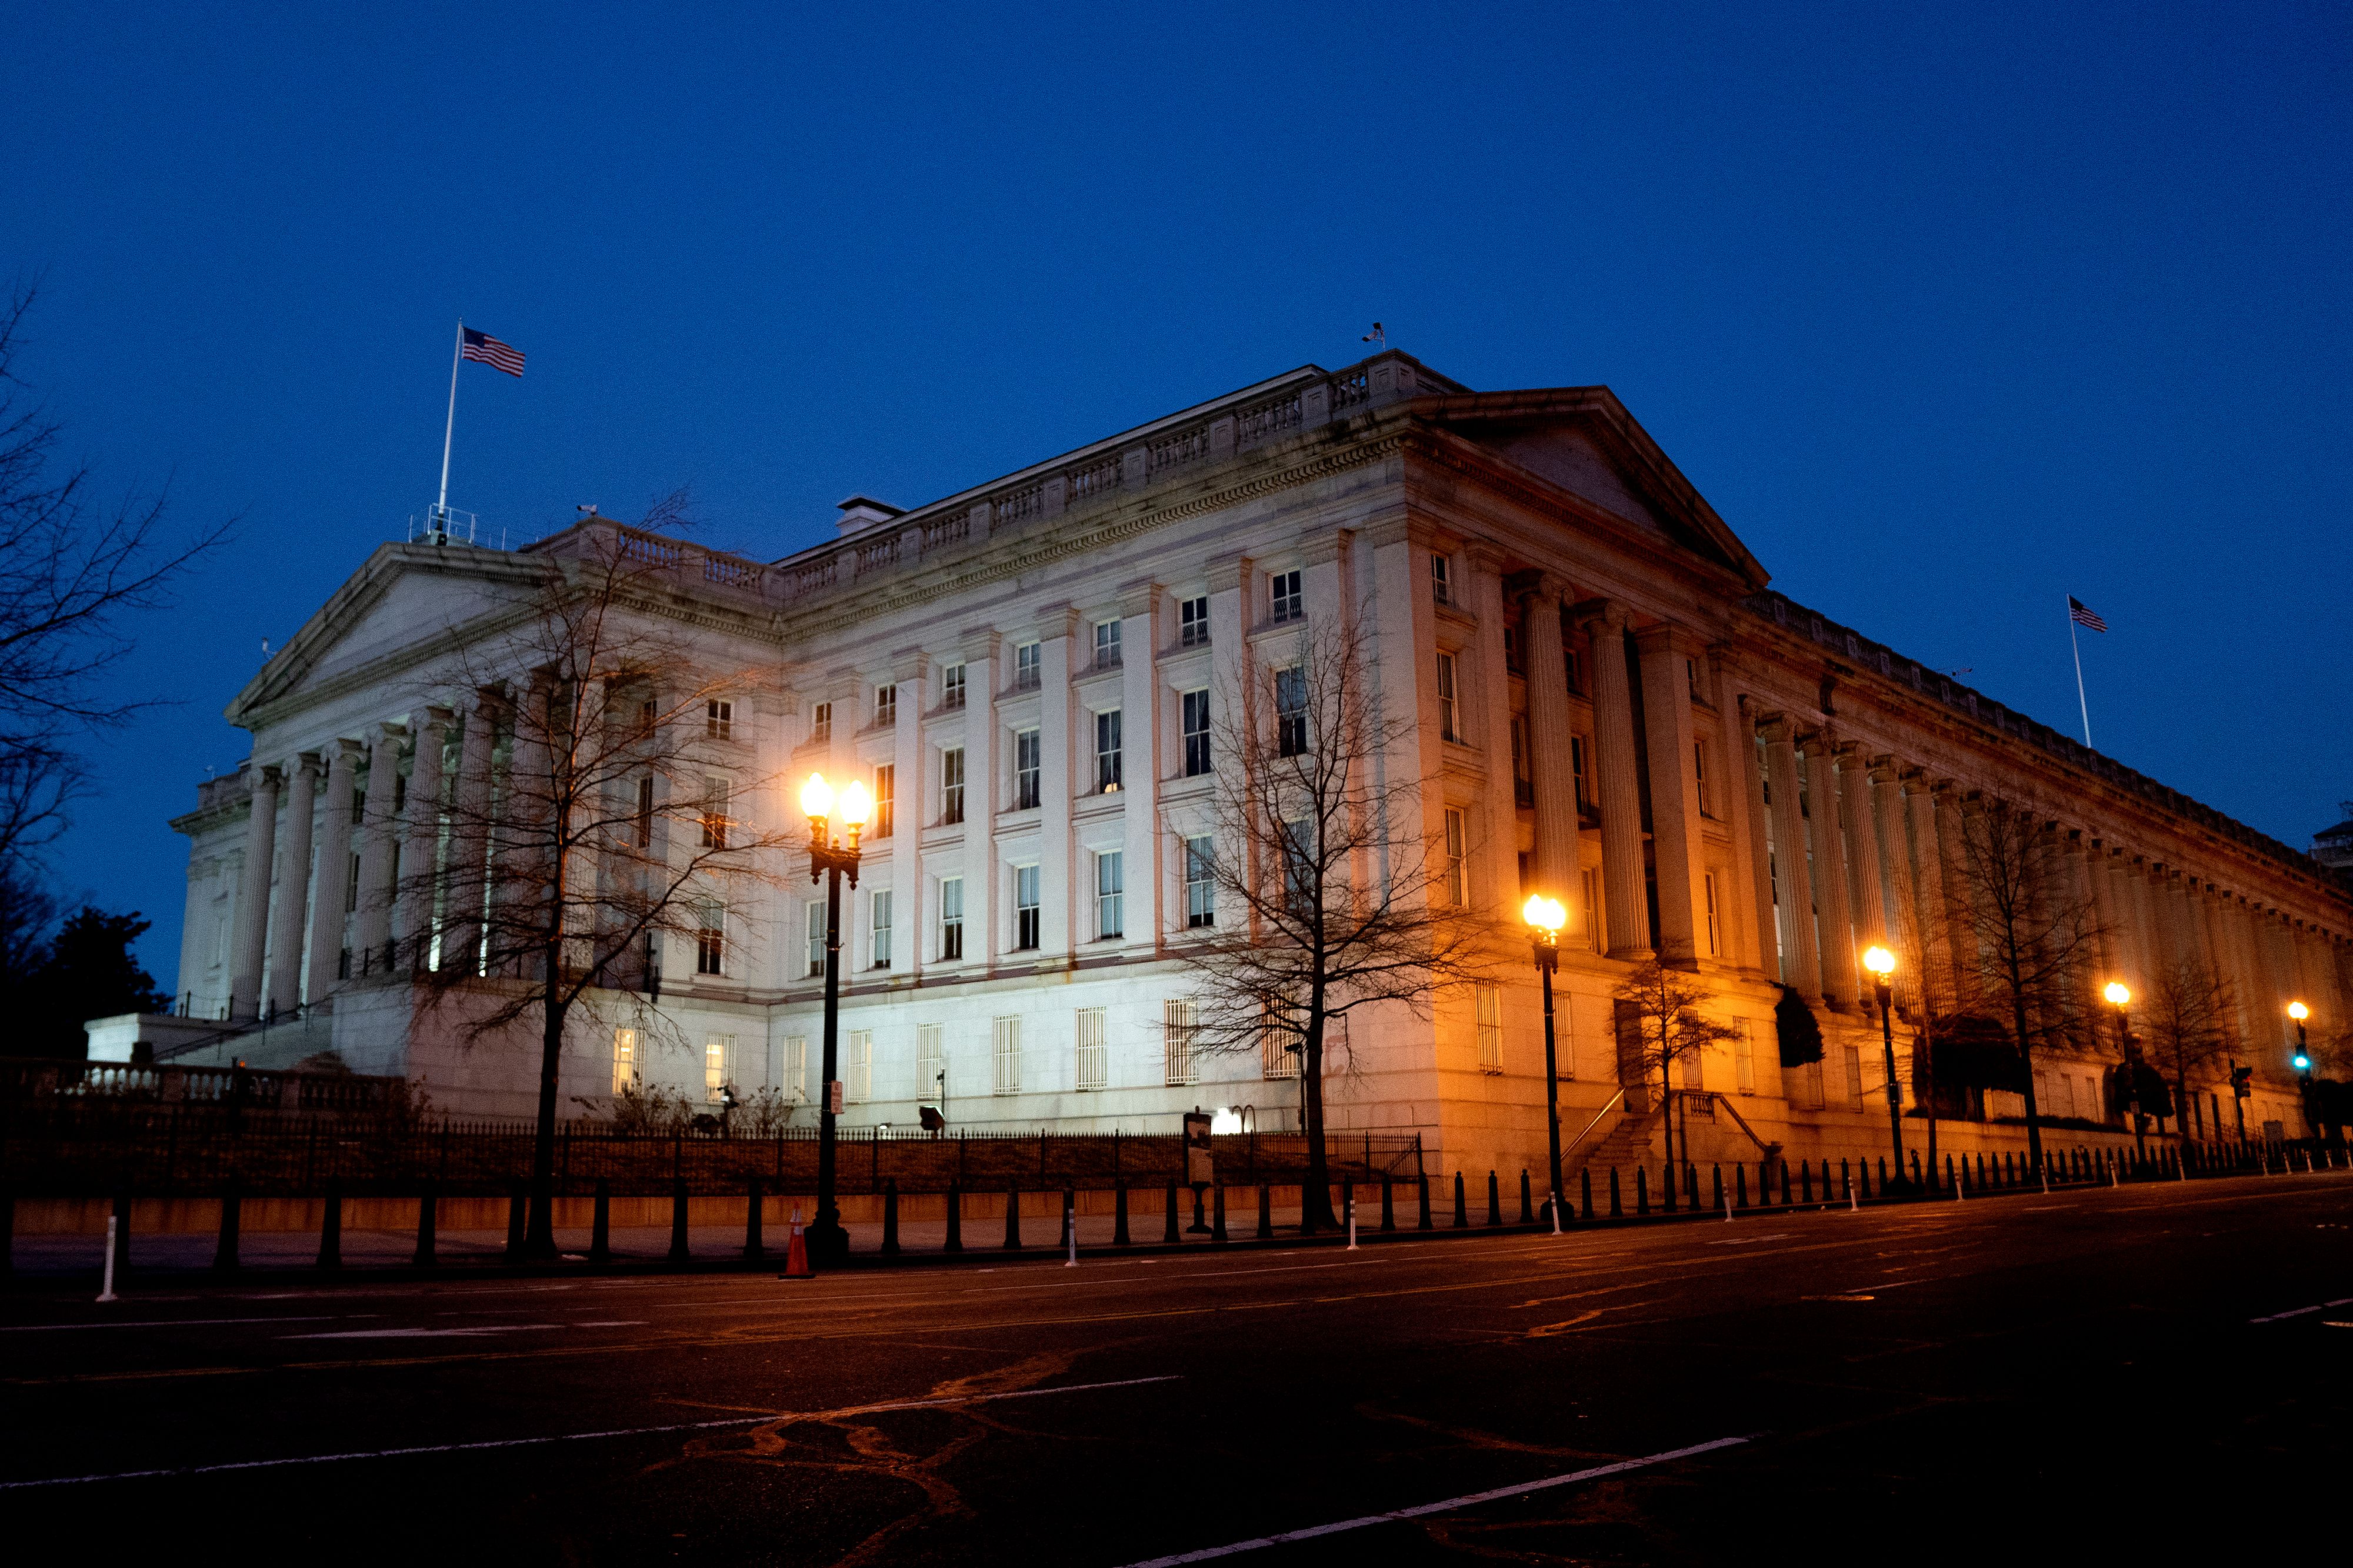 The U.S. Department of Treasury